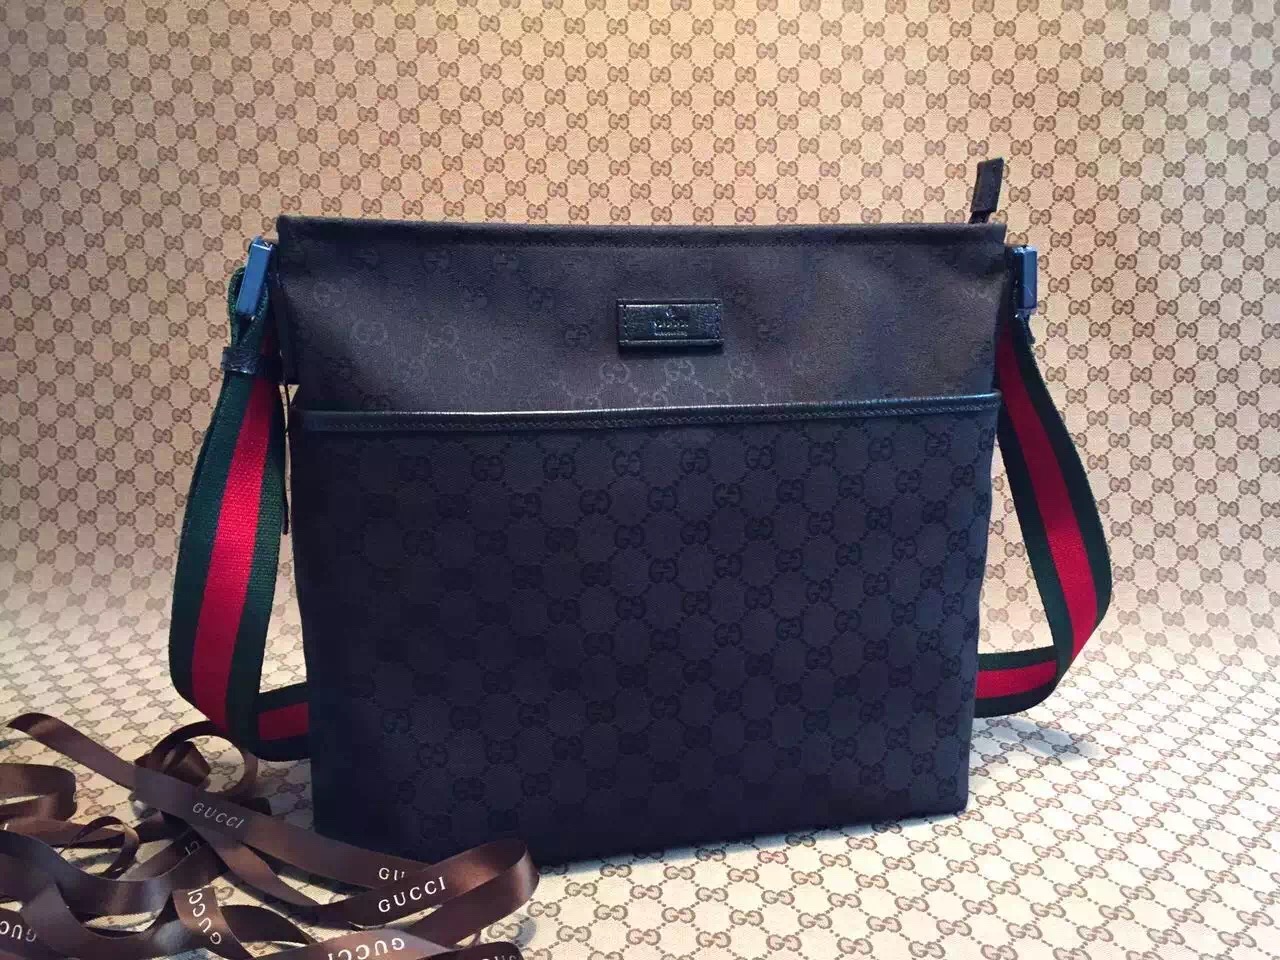 Gucci Bag in Black colour-GU50118 [GU50118] - $99.00USD : USPURSE ...